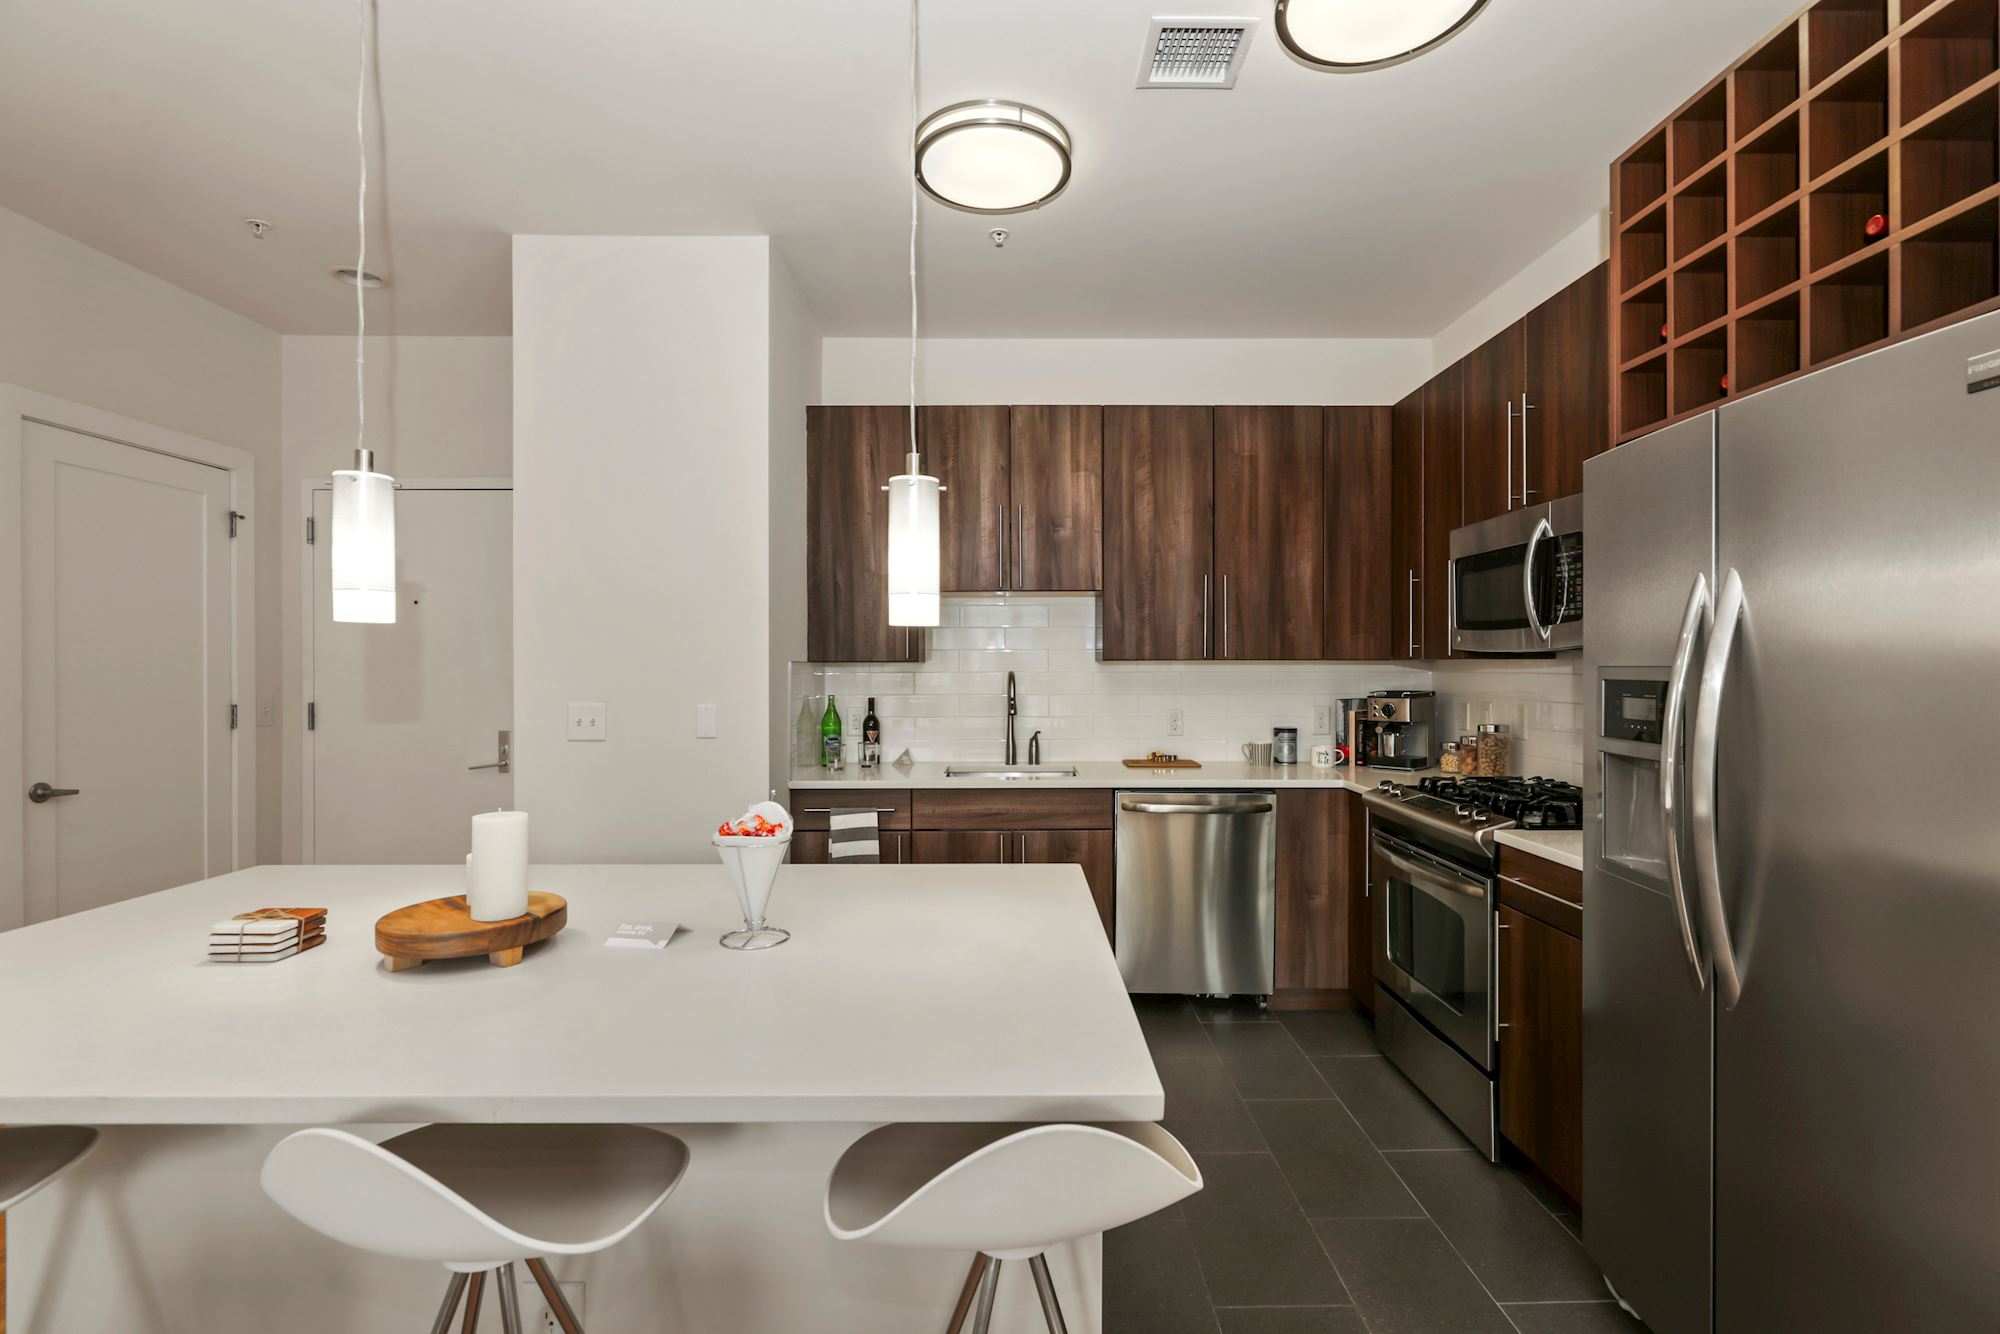 A modern kitchen with sleek, stainless steel appliances